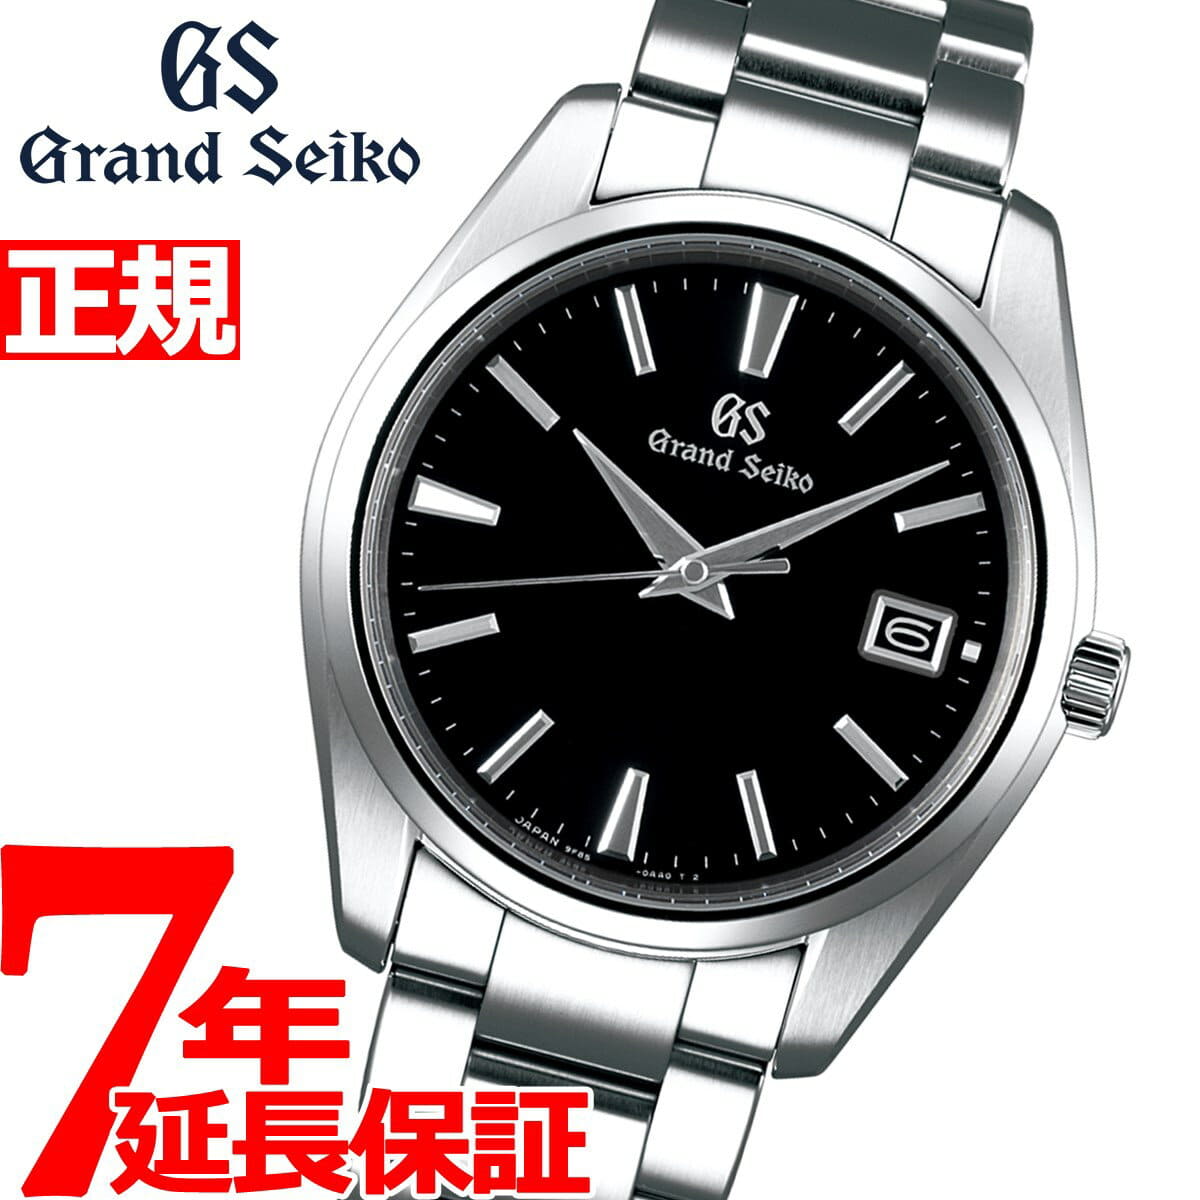 New]GRAND SEIKO Men's Watch SBGP011 - BE FORWARD Store